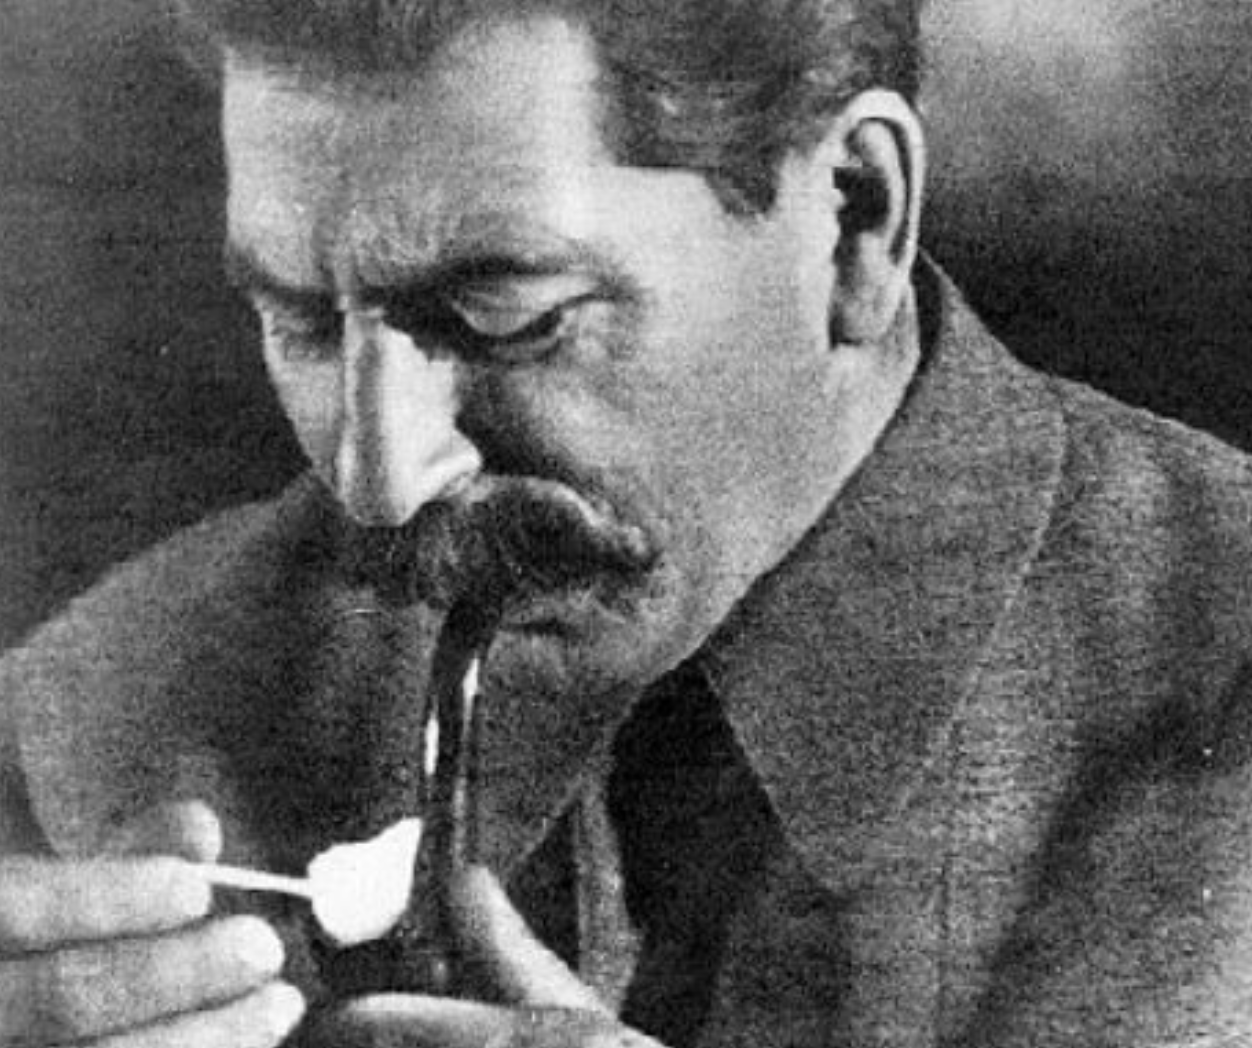 Pipa lui Stalin, din chihlimbar românesc – un banc memorabil!